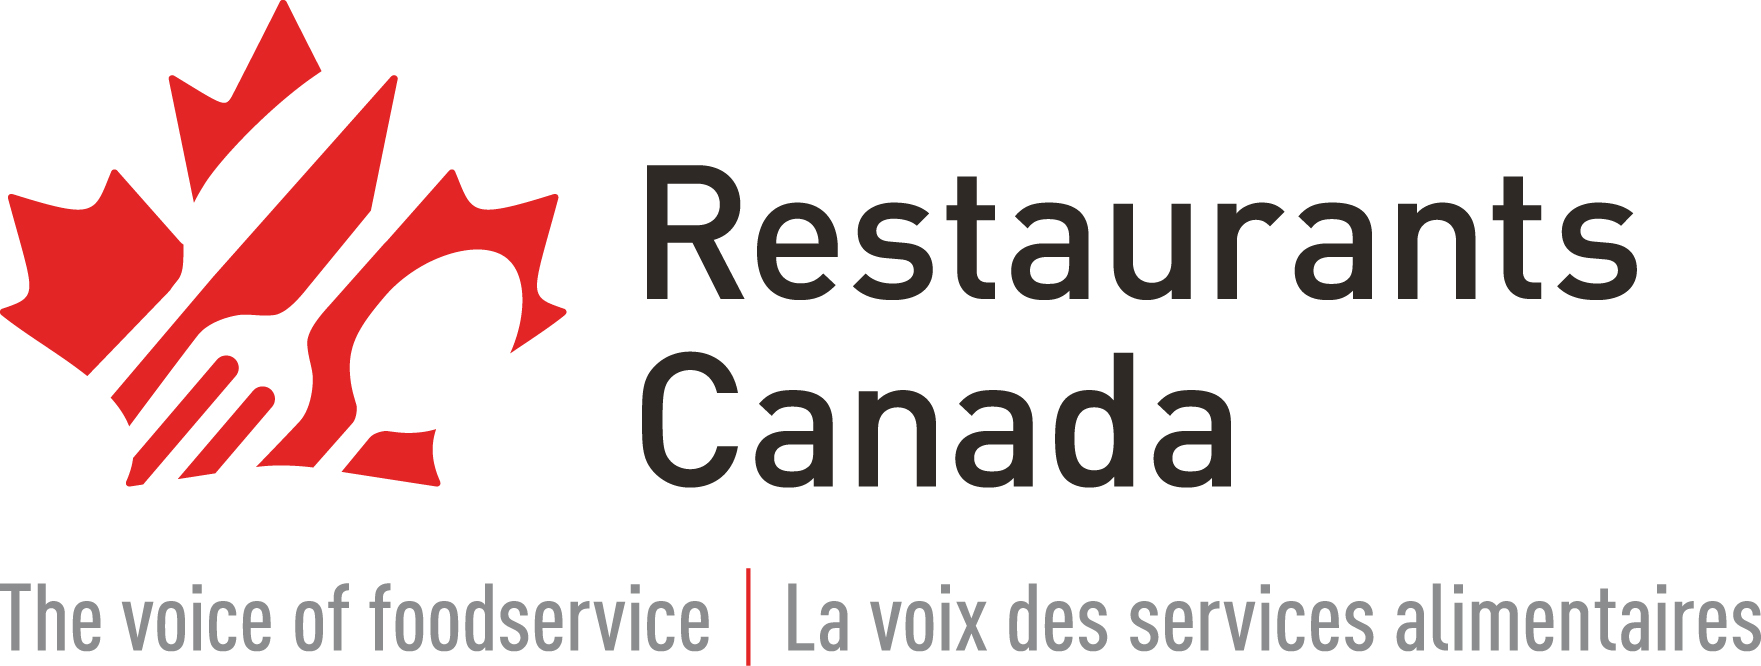 Alberta’s Restaurant